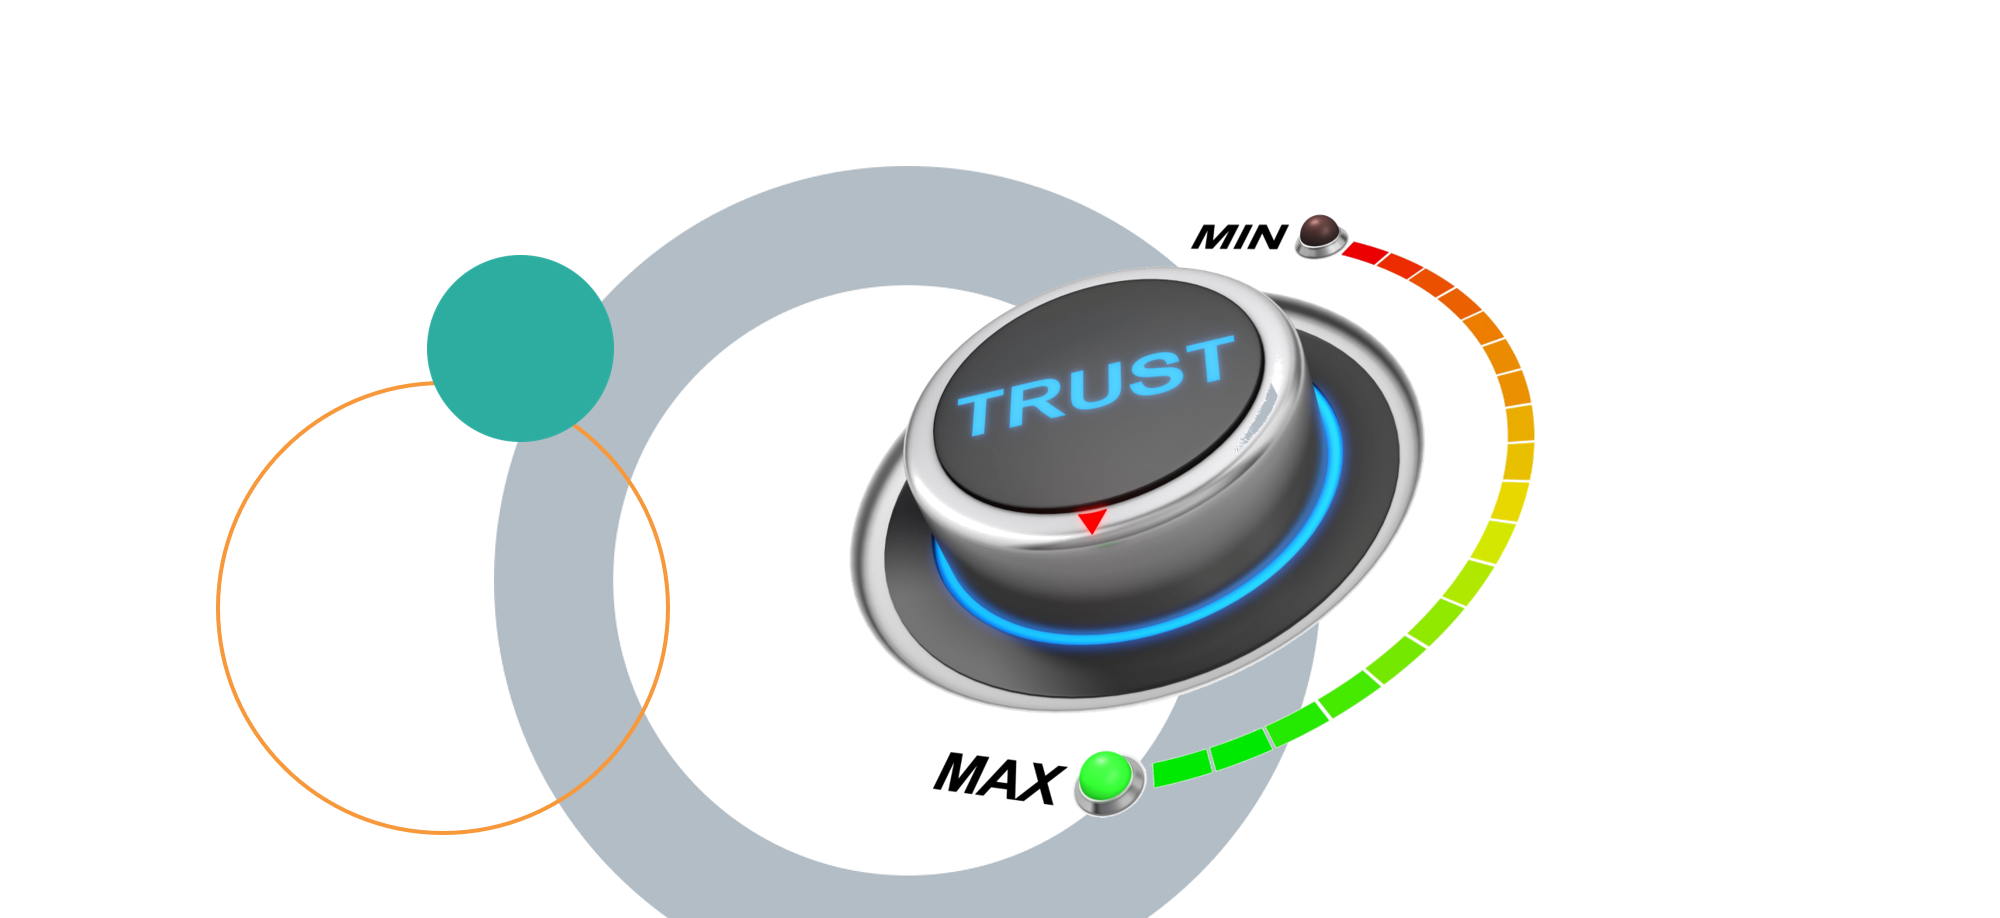 Edelman Trust Barometer – Our Top 5 Takeaways